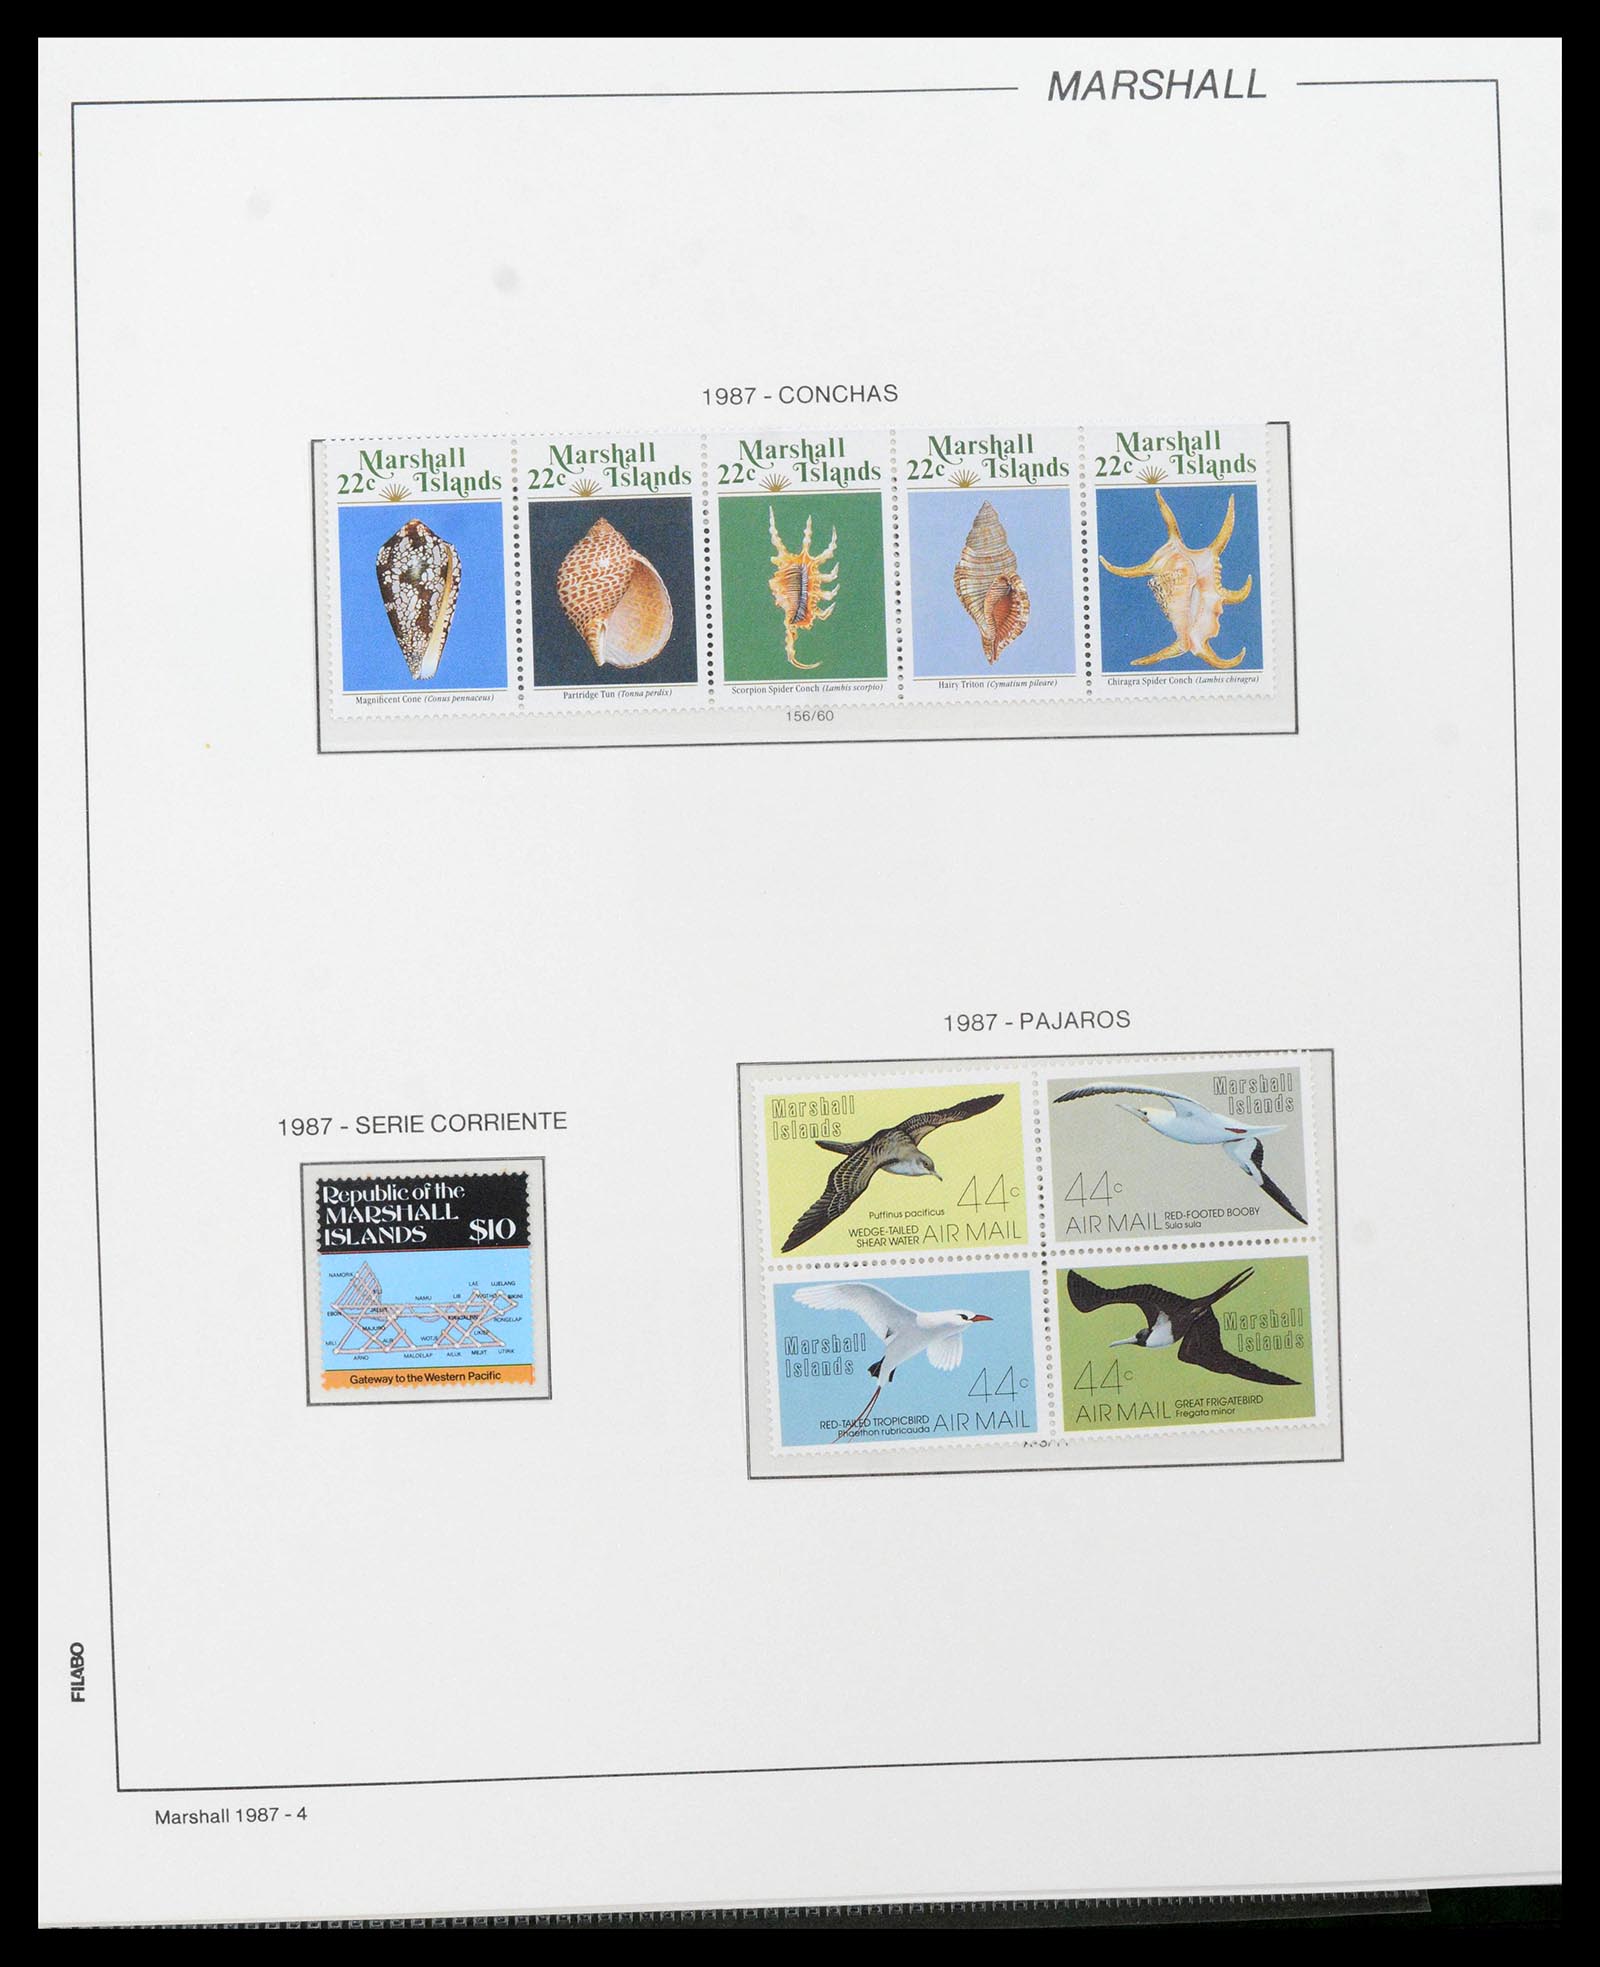 39222 0125 - Stamp collection 39222 Palau, Micronesia and Marshall islands 1980-1995.